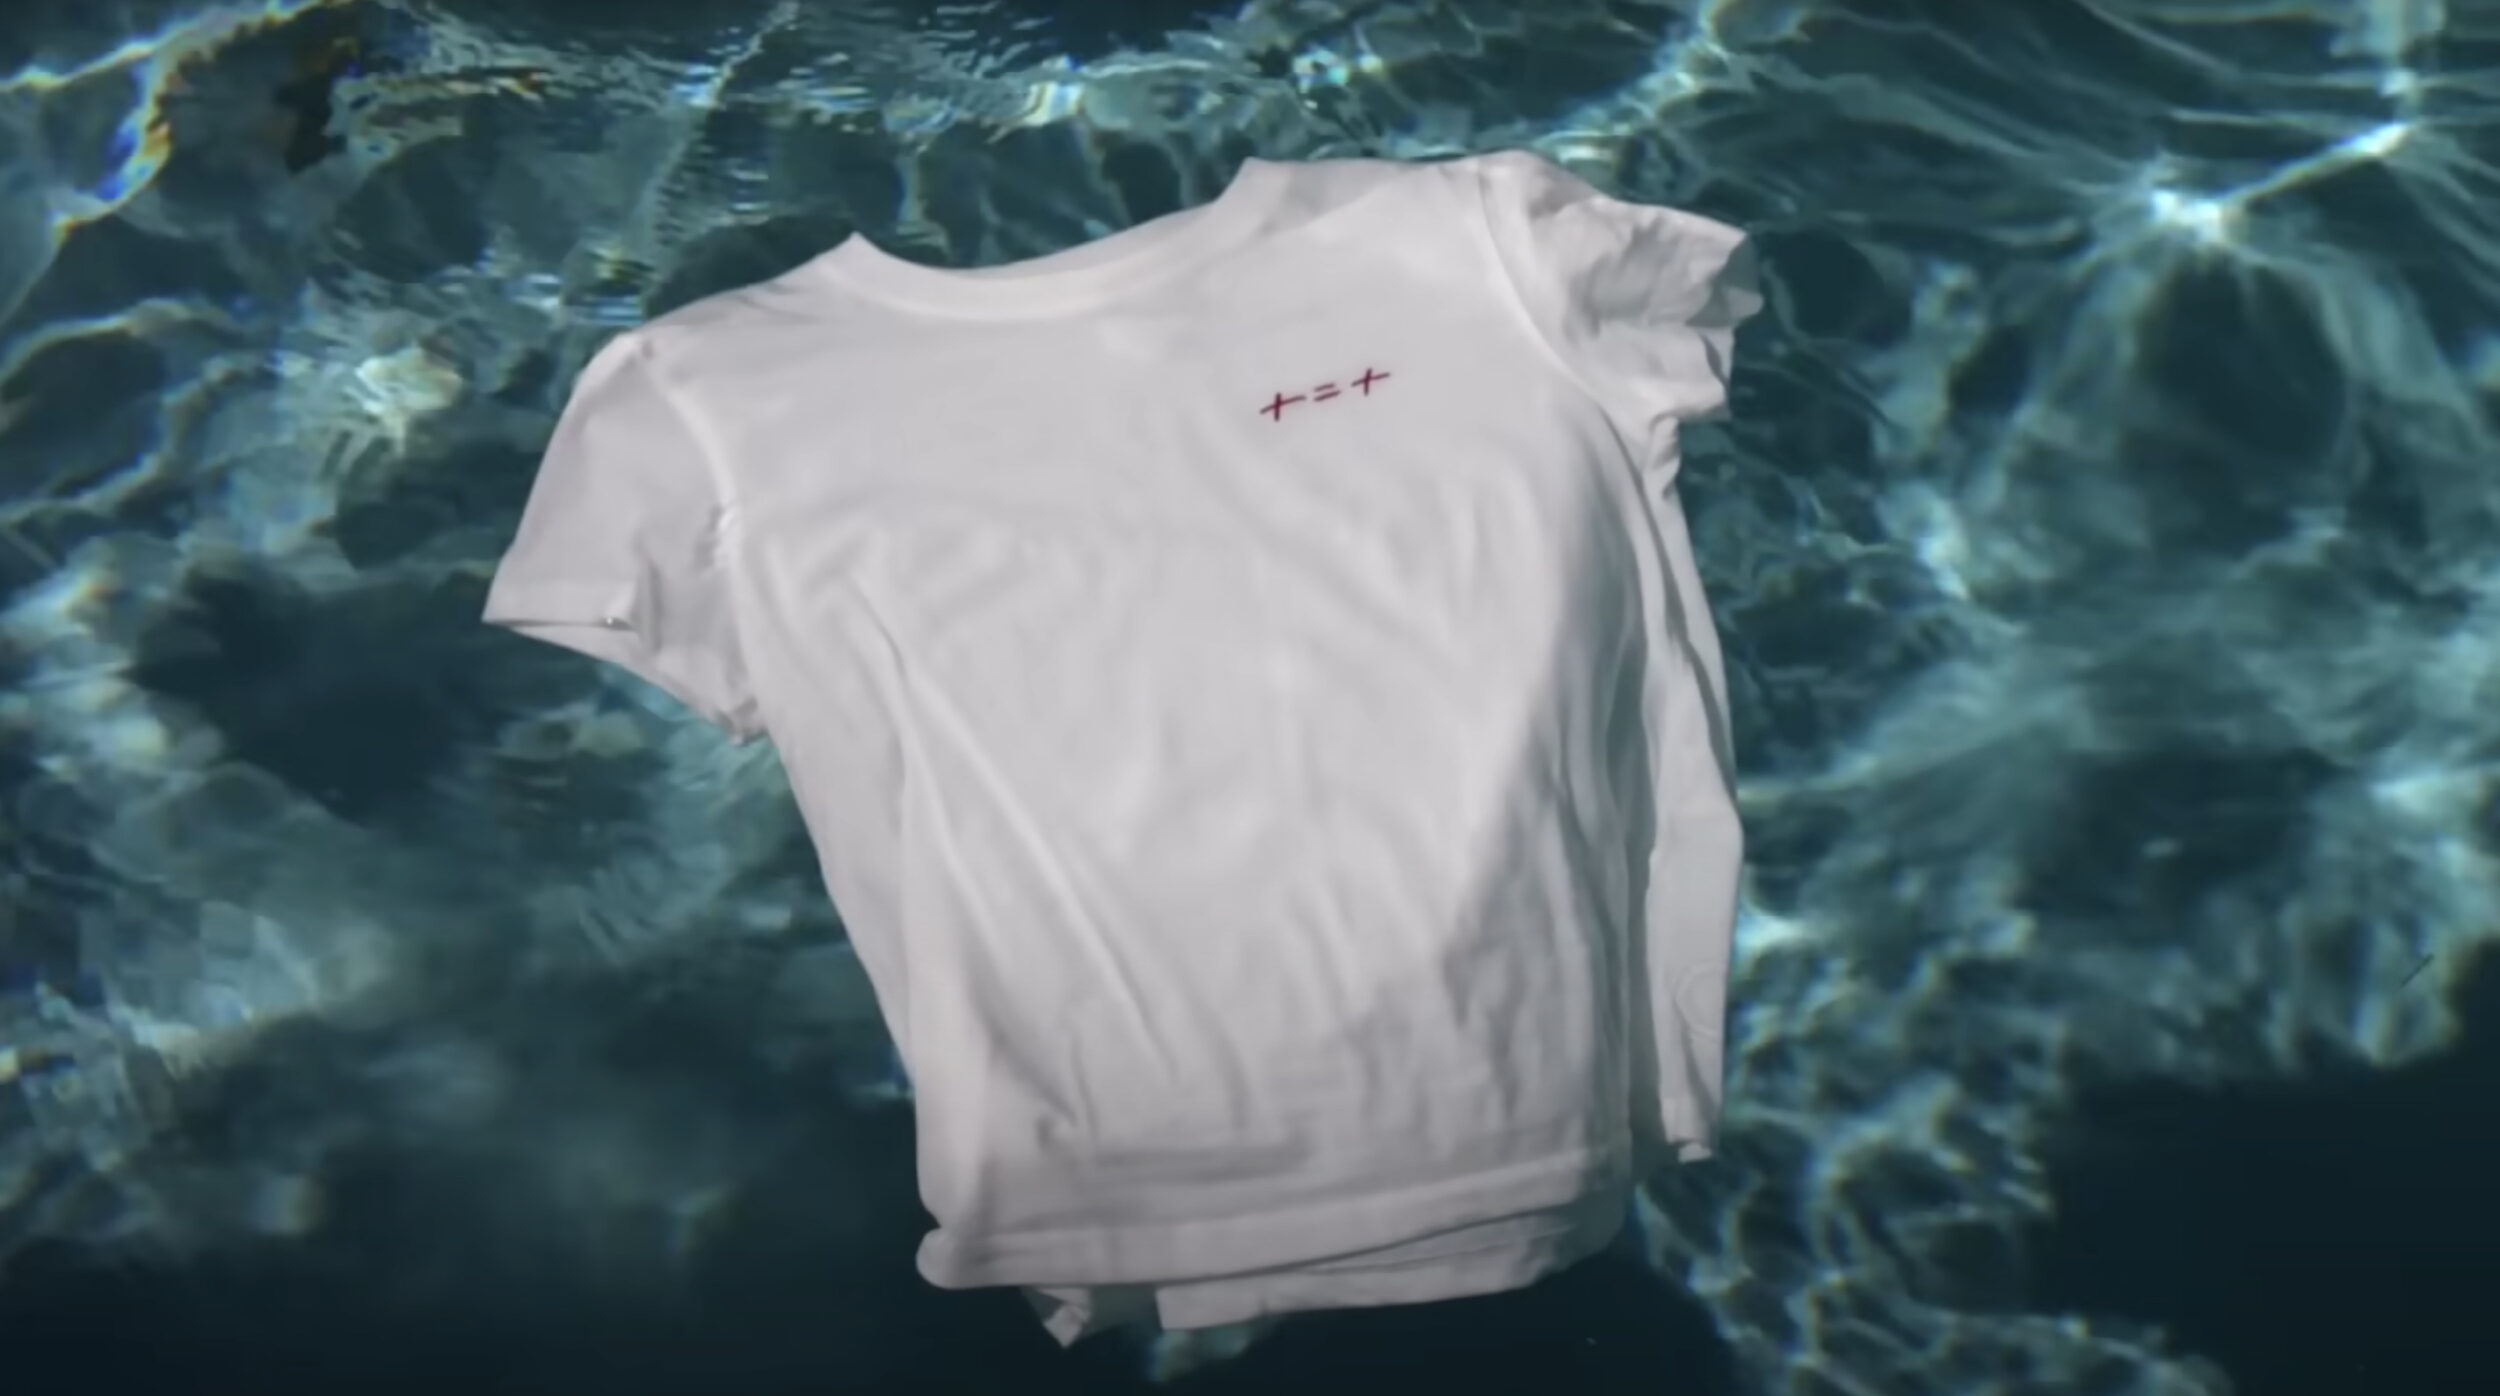 Un t-shirt brodé + = + de la marque Hôtel Mahfouf de Lena Situations, flottan dans une piscine